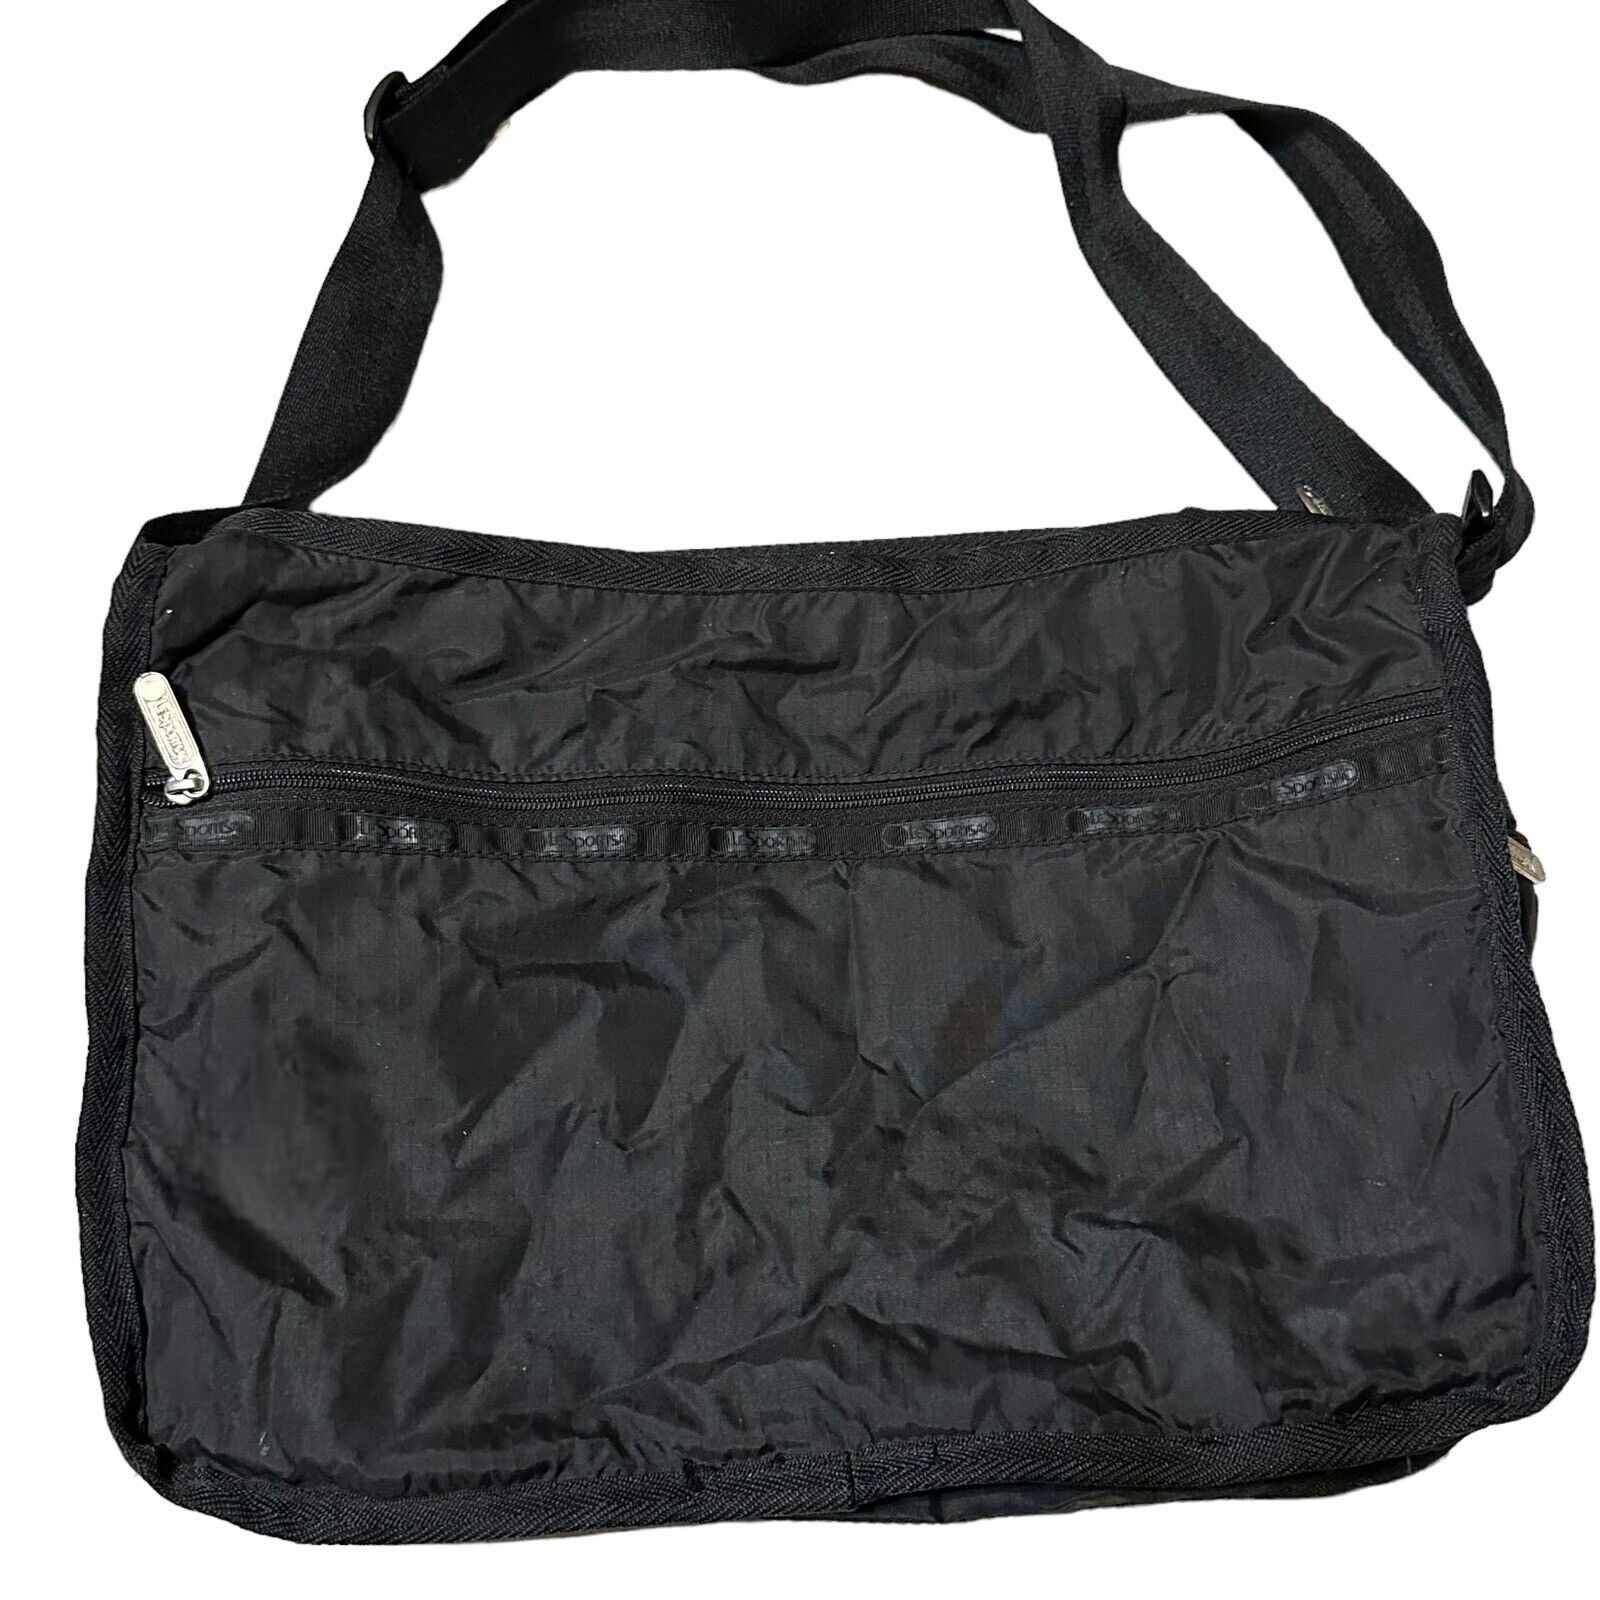 LeSportSac Black Messenger Bag Crossbody Purse - image 5